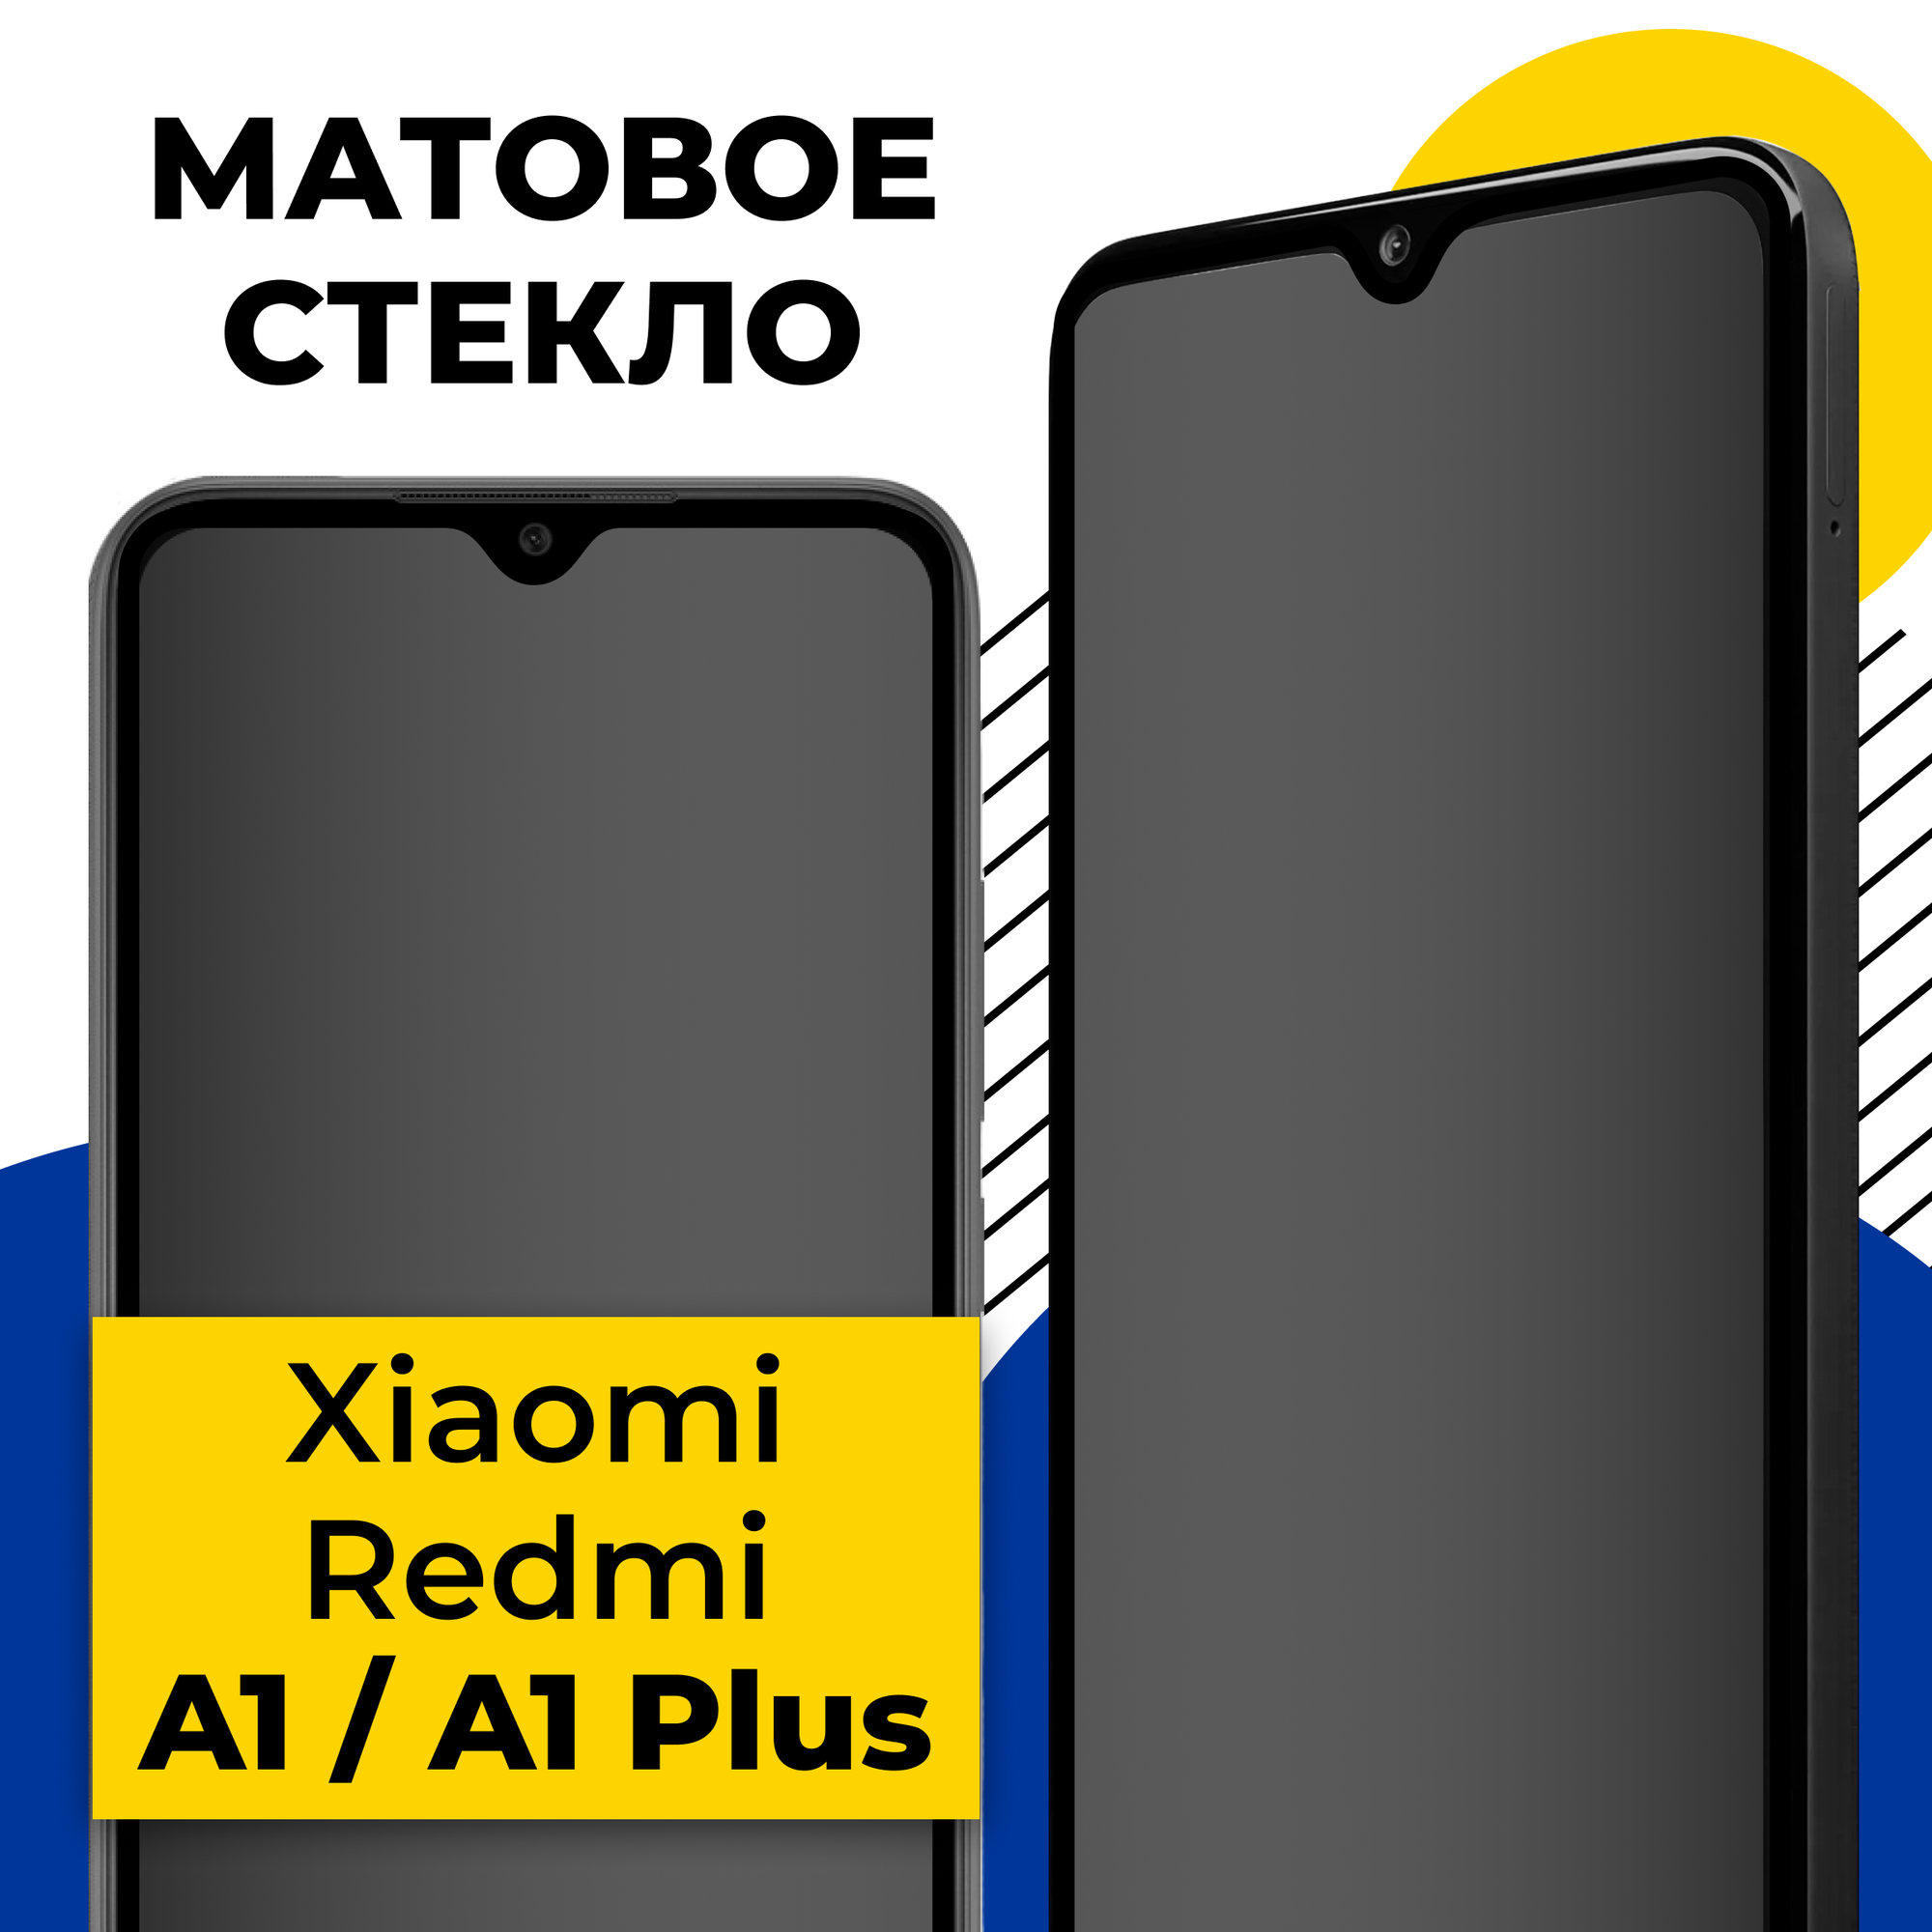 Матовое защитное стекло на телефон Xiaomi Redmi A1 и A1 Plus / Противоударное стекло на смартфон Сяоми Редми А1 и А1 Плюс